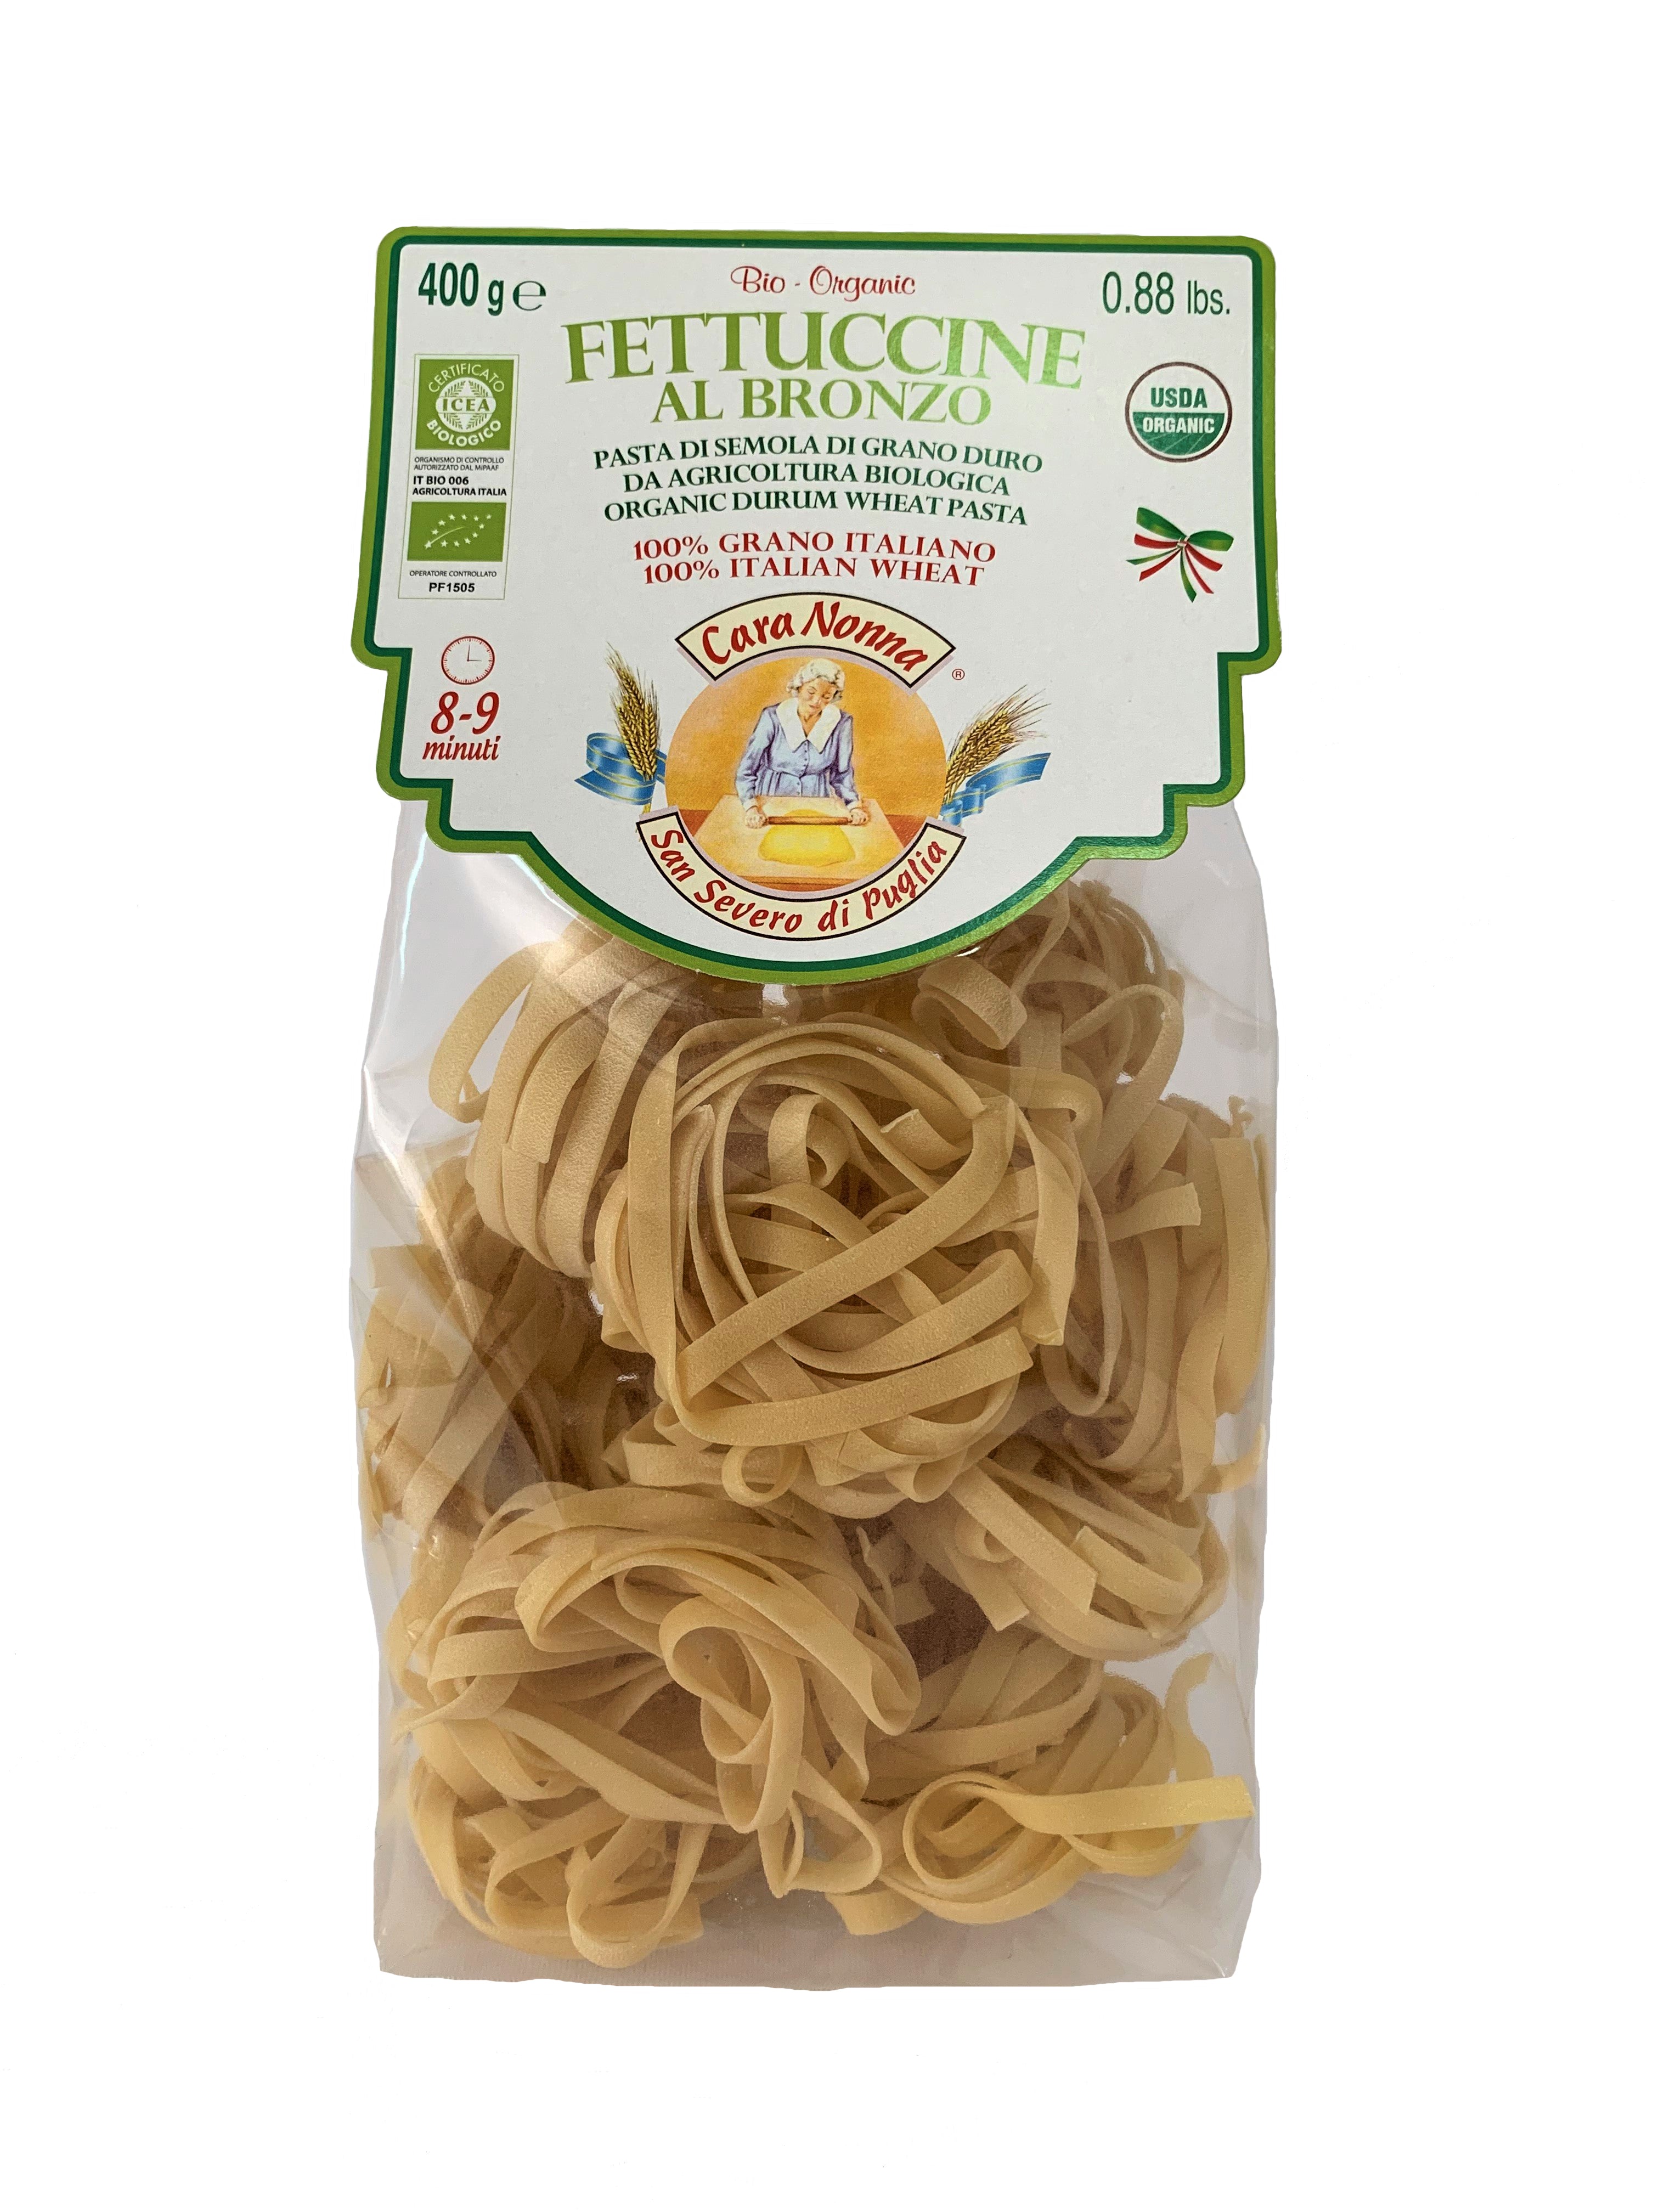 CARANONNA Organic Fettuccine Al Bronzo Pasta 400g